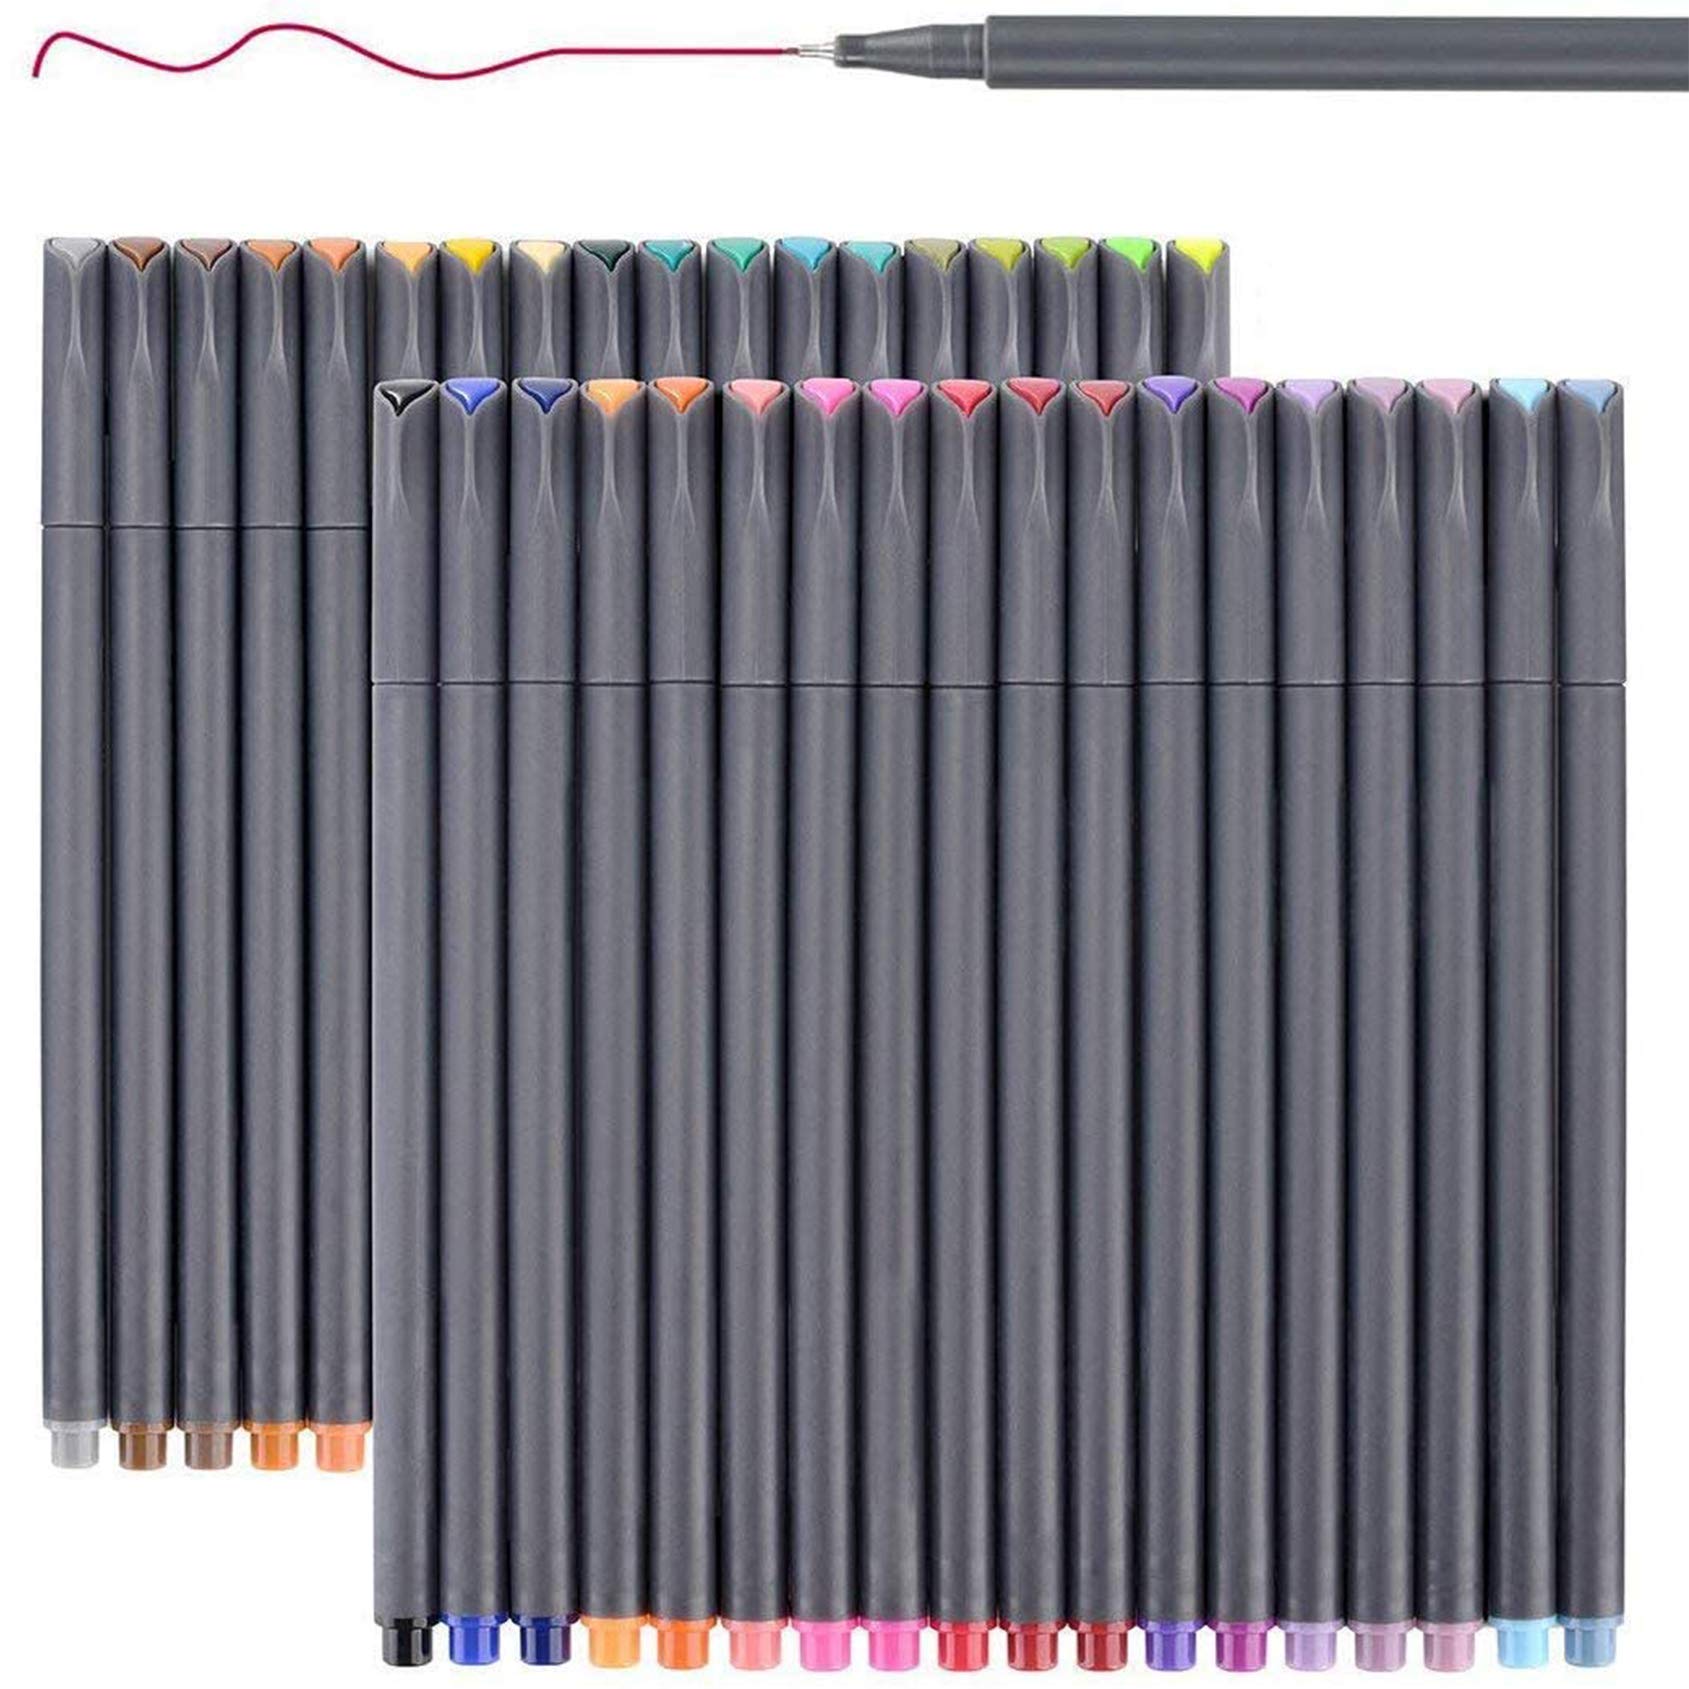  iBayam Dual Tip Art Brush Marker Pens for Adult